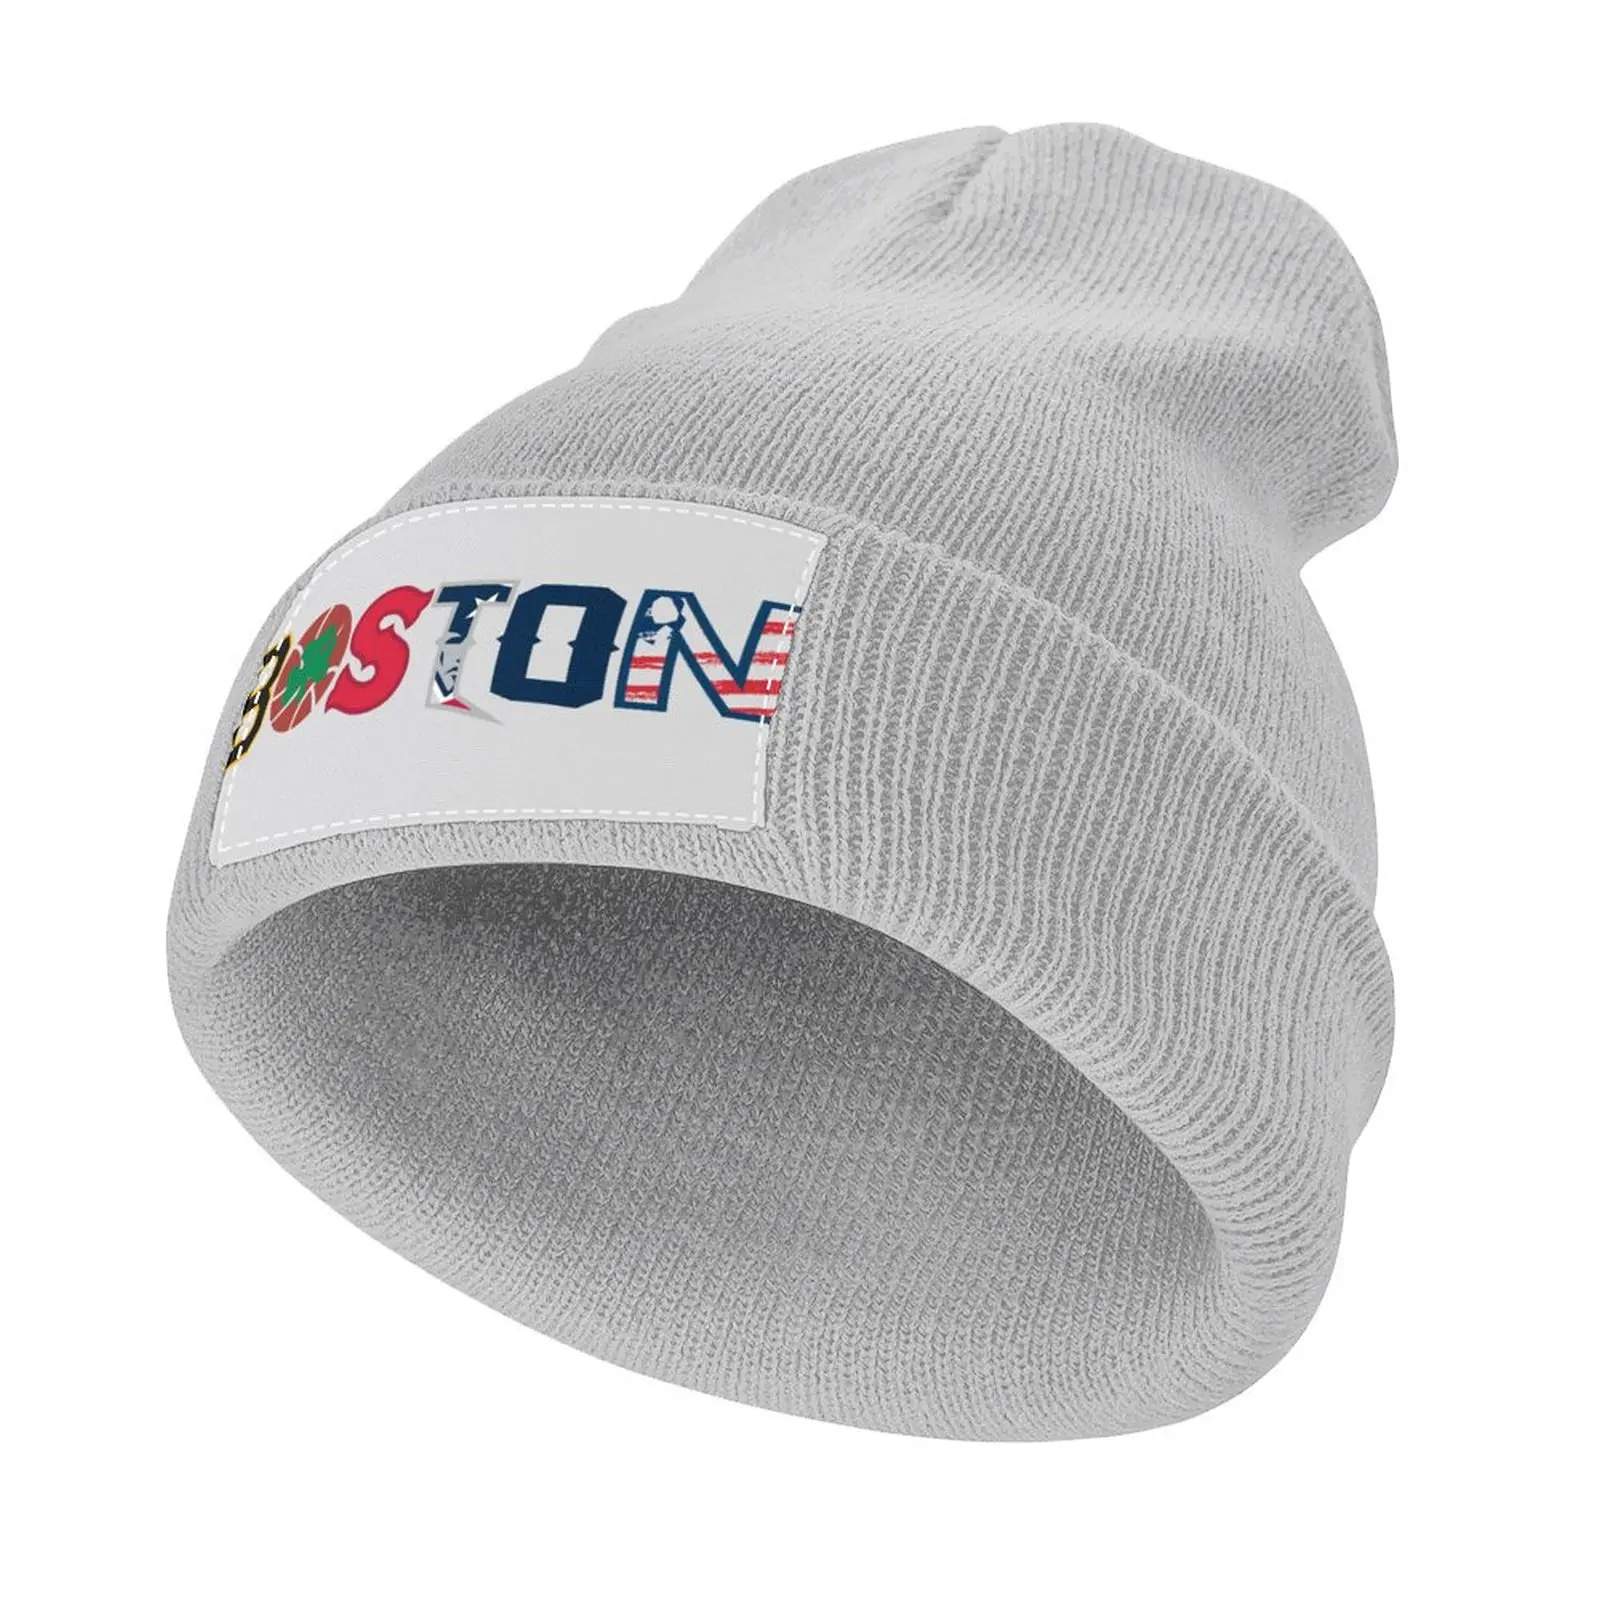 

Boston Sport Champions Knitted Hat beach hat Thermal Visor Cap Female Men's